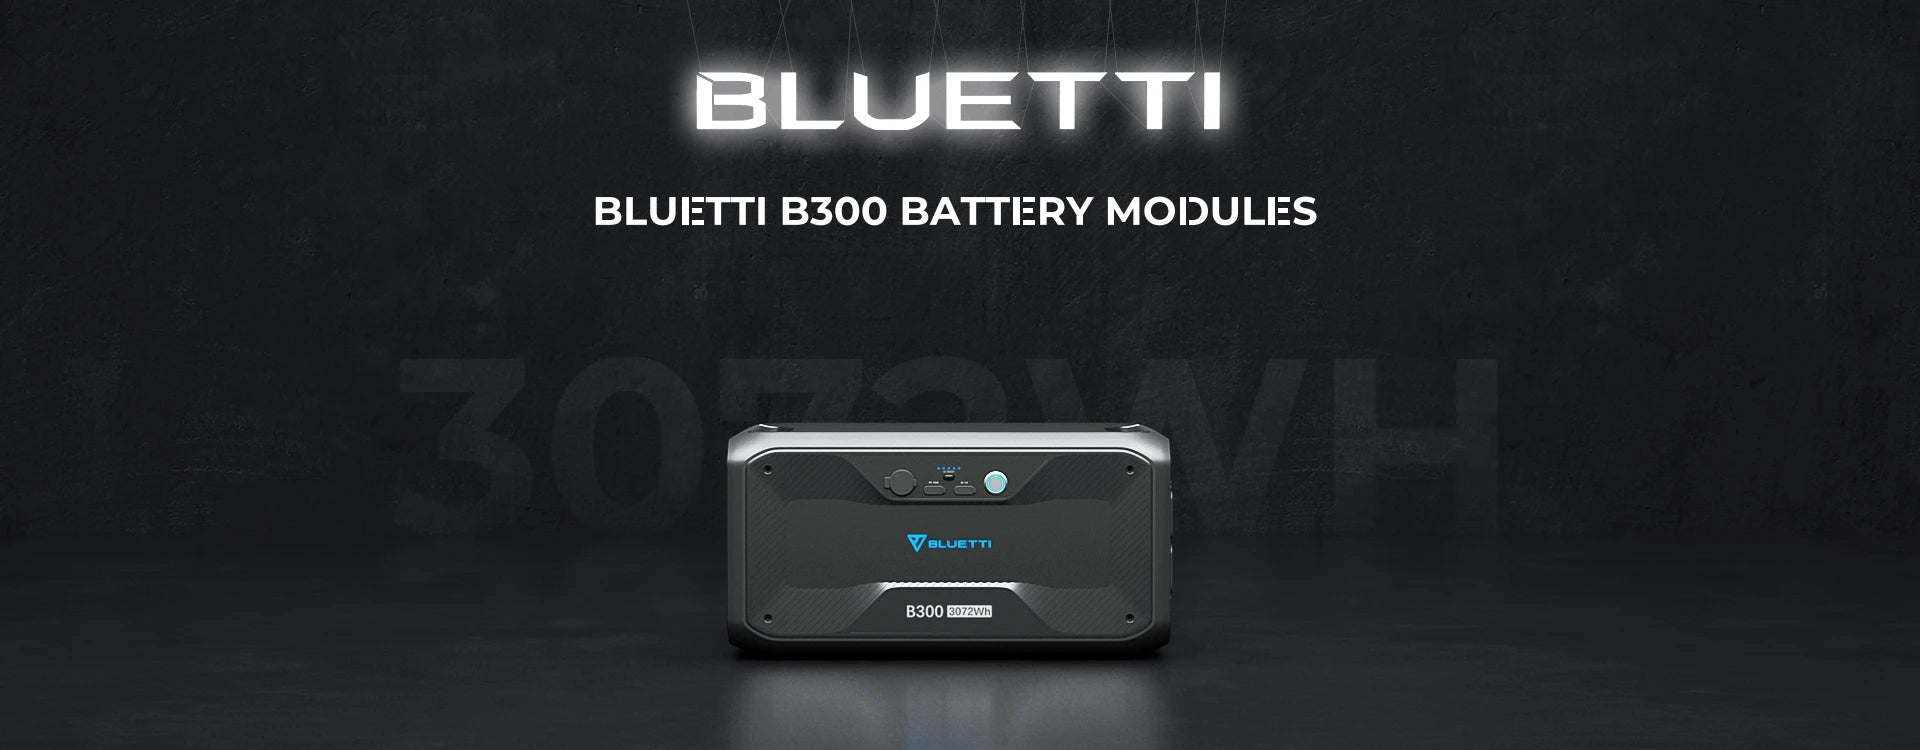 bluetti b300 expansion battery